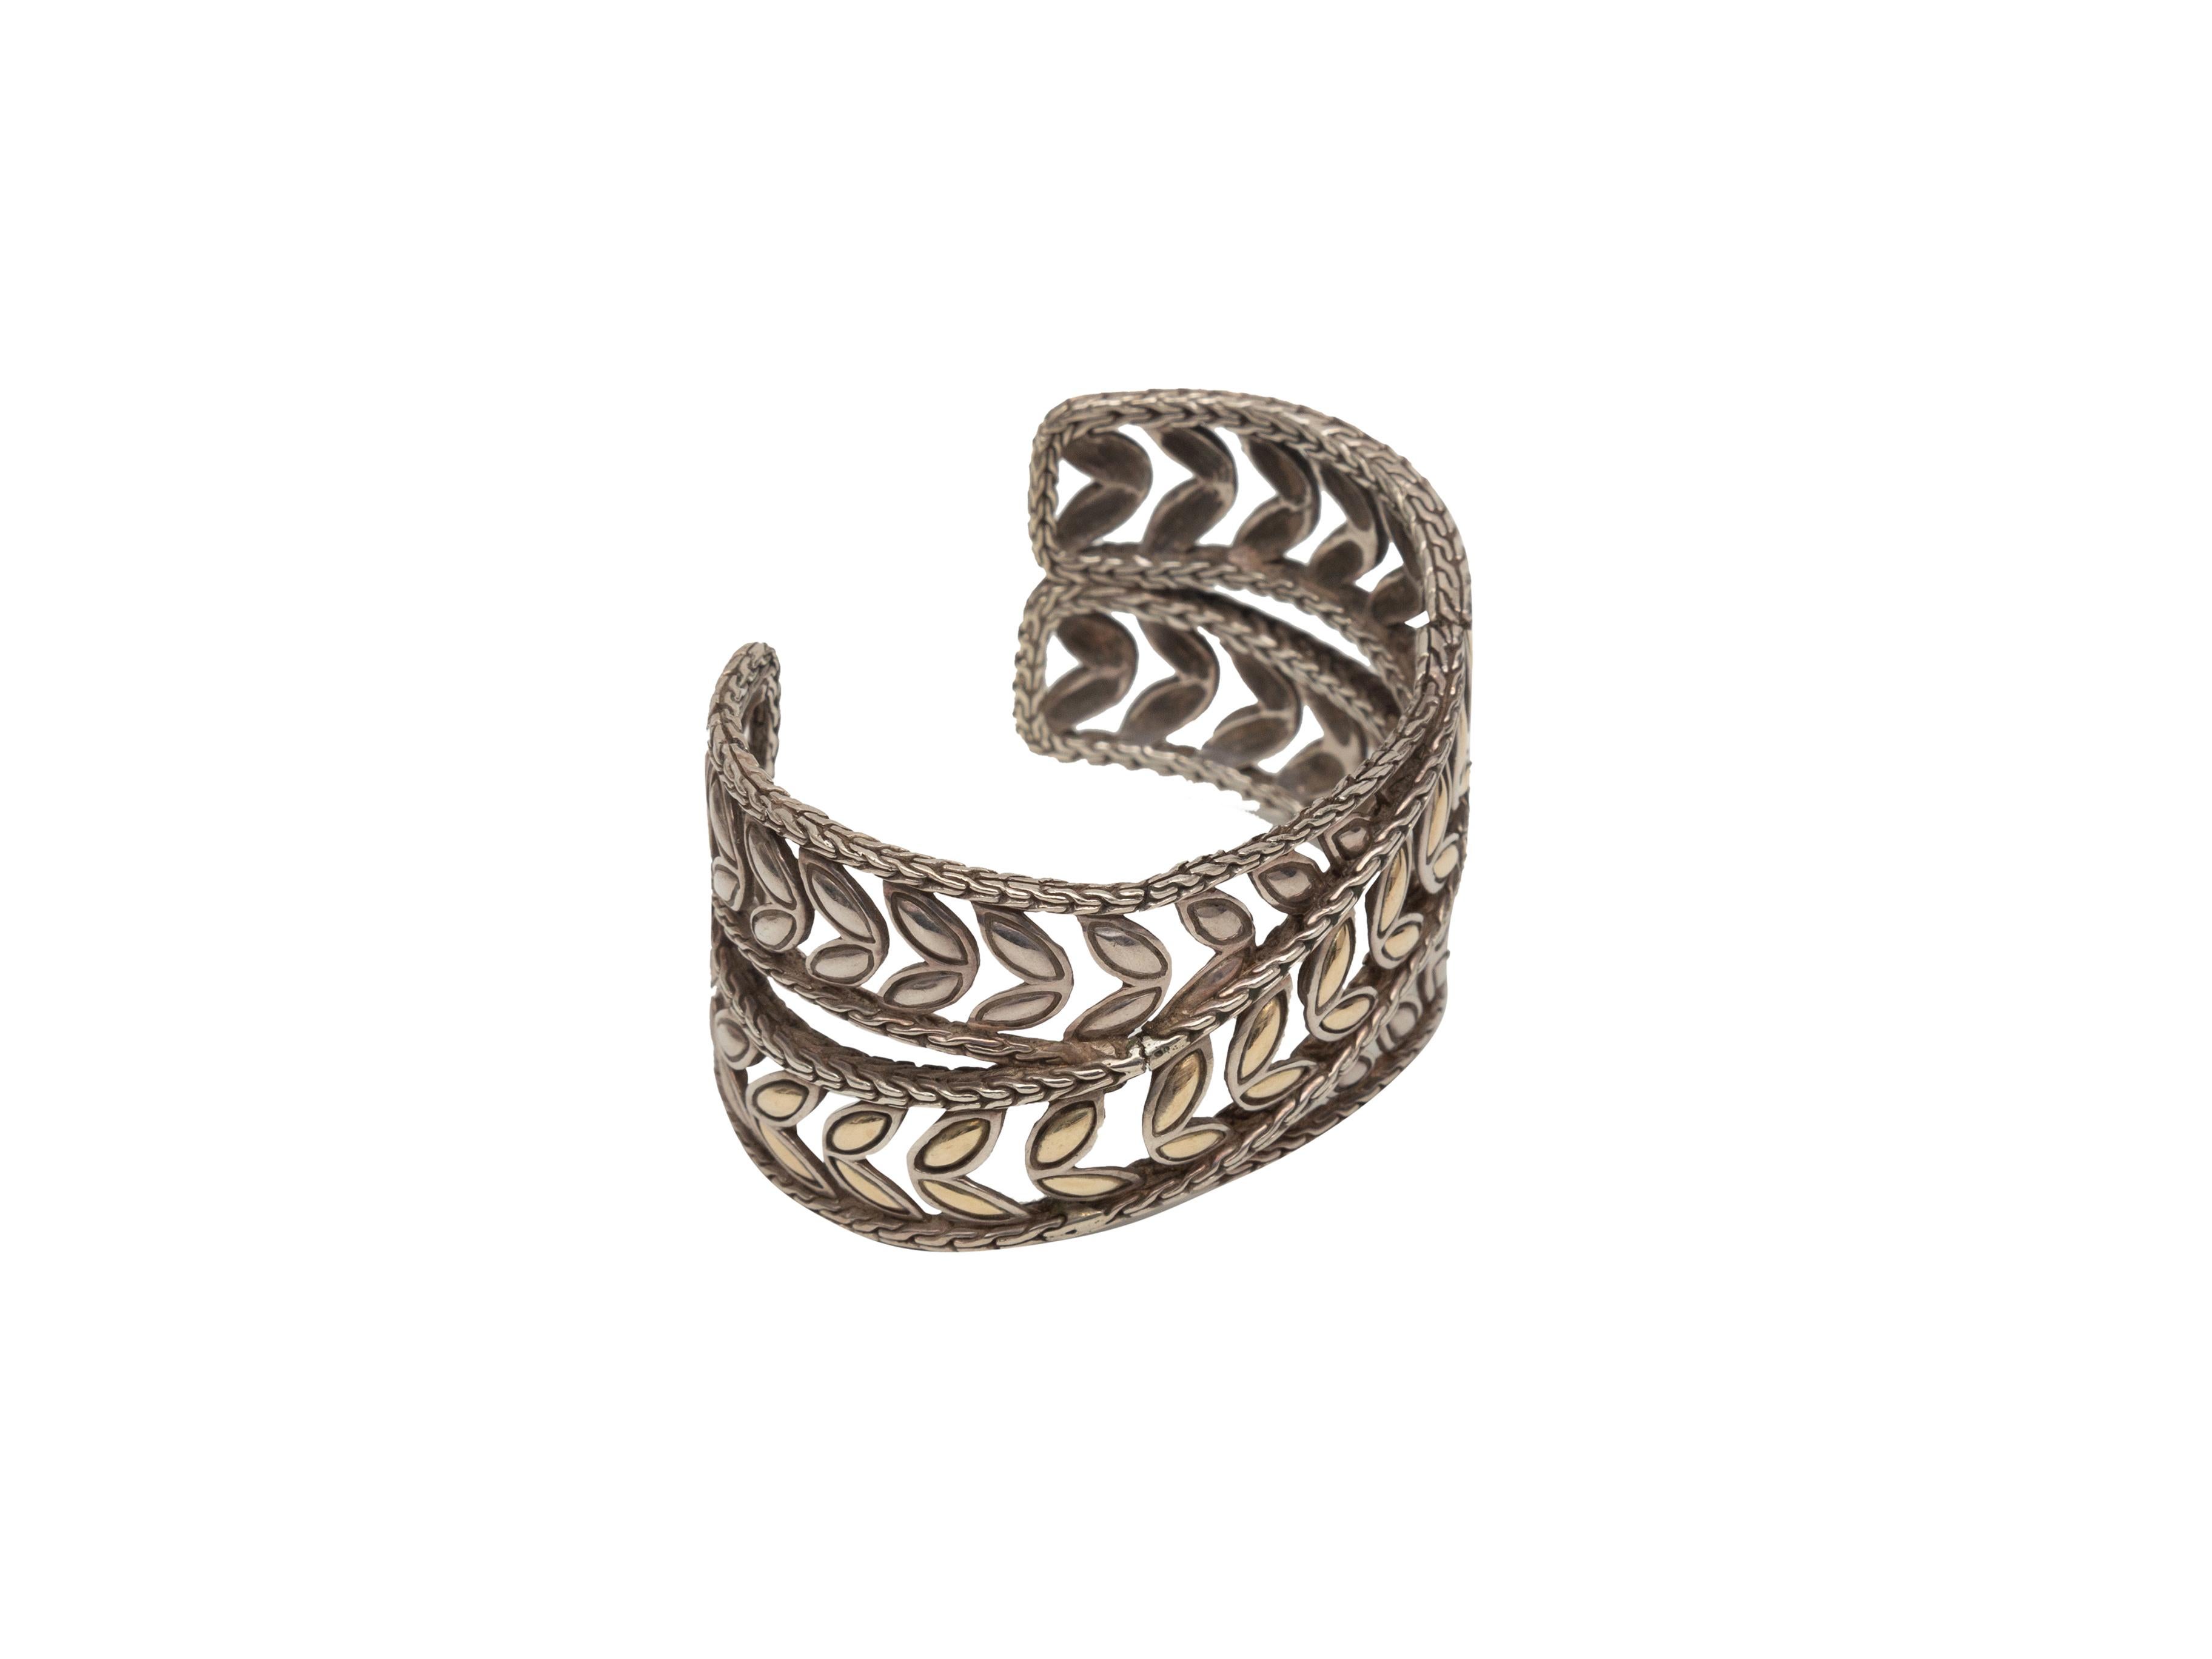 Product Details: Sterling silver leaf cuff bracelet by John Hardy. 2.5